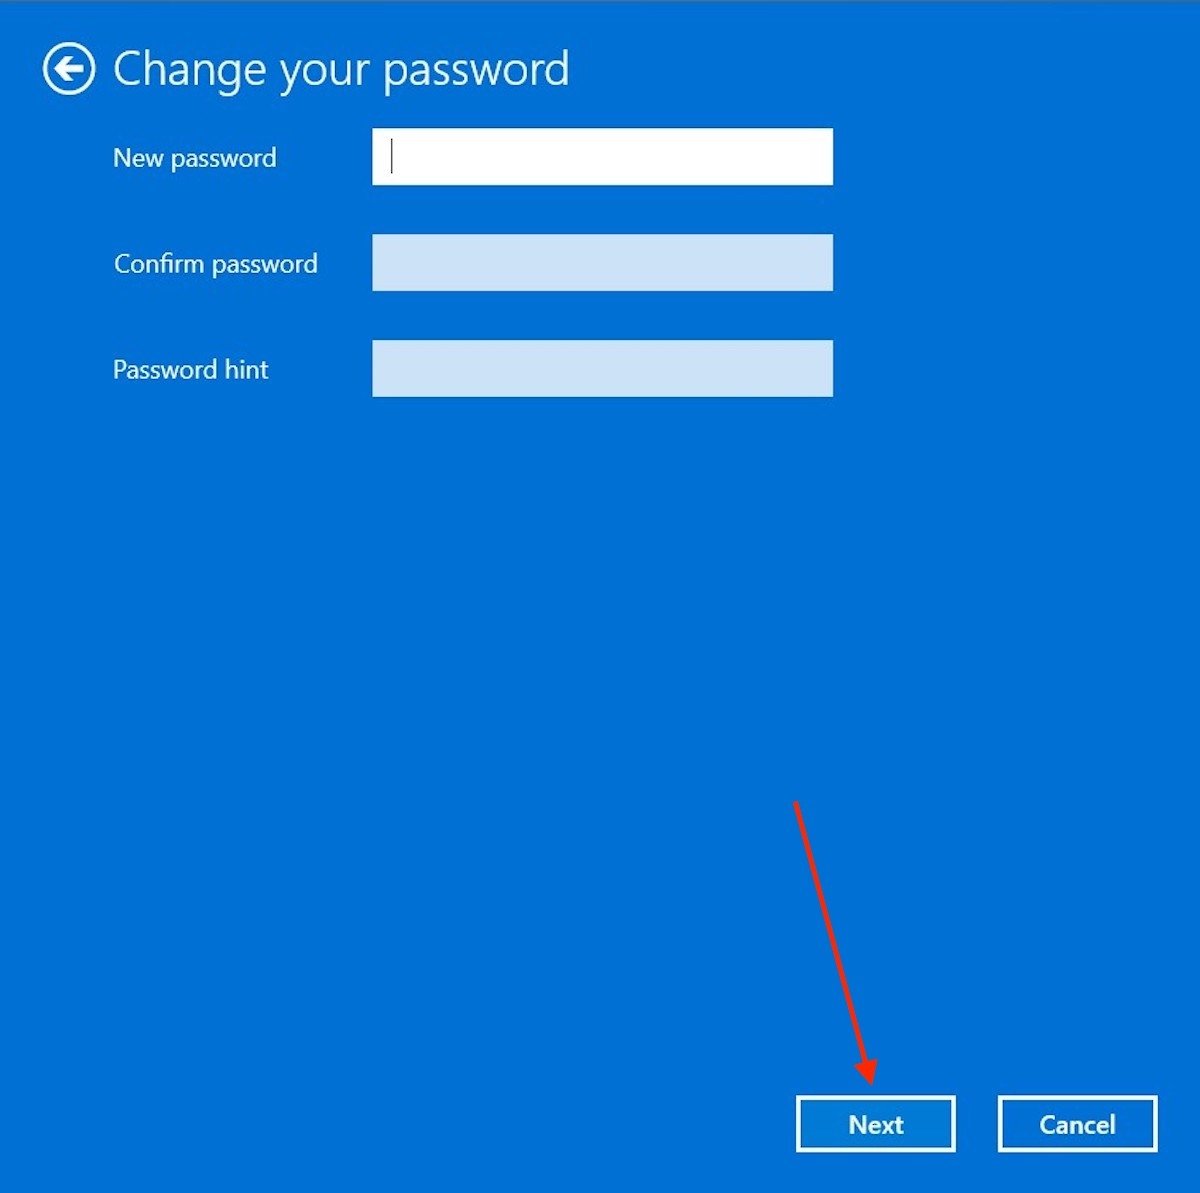 Leave new password fields blank